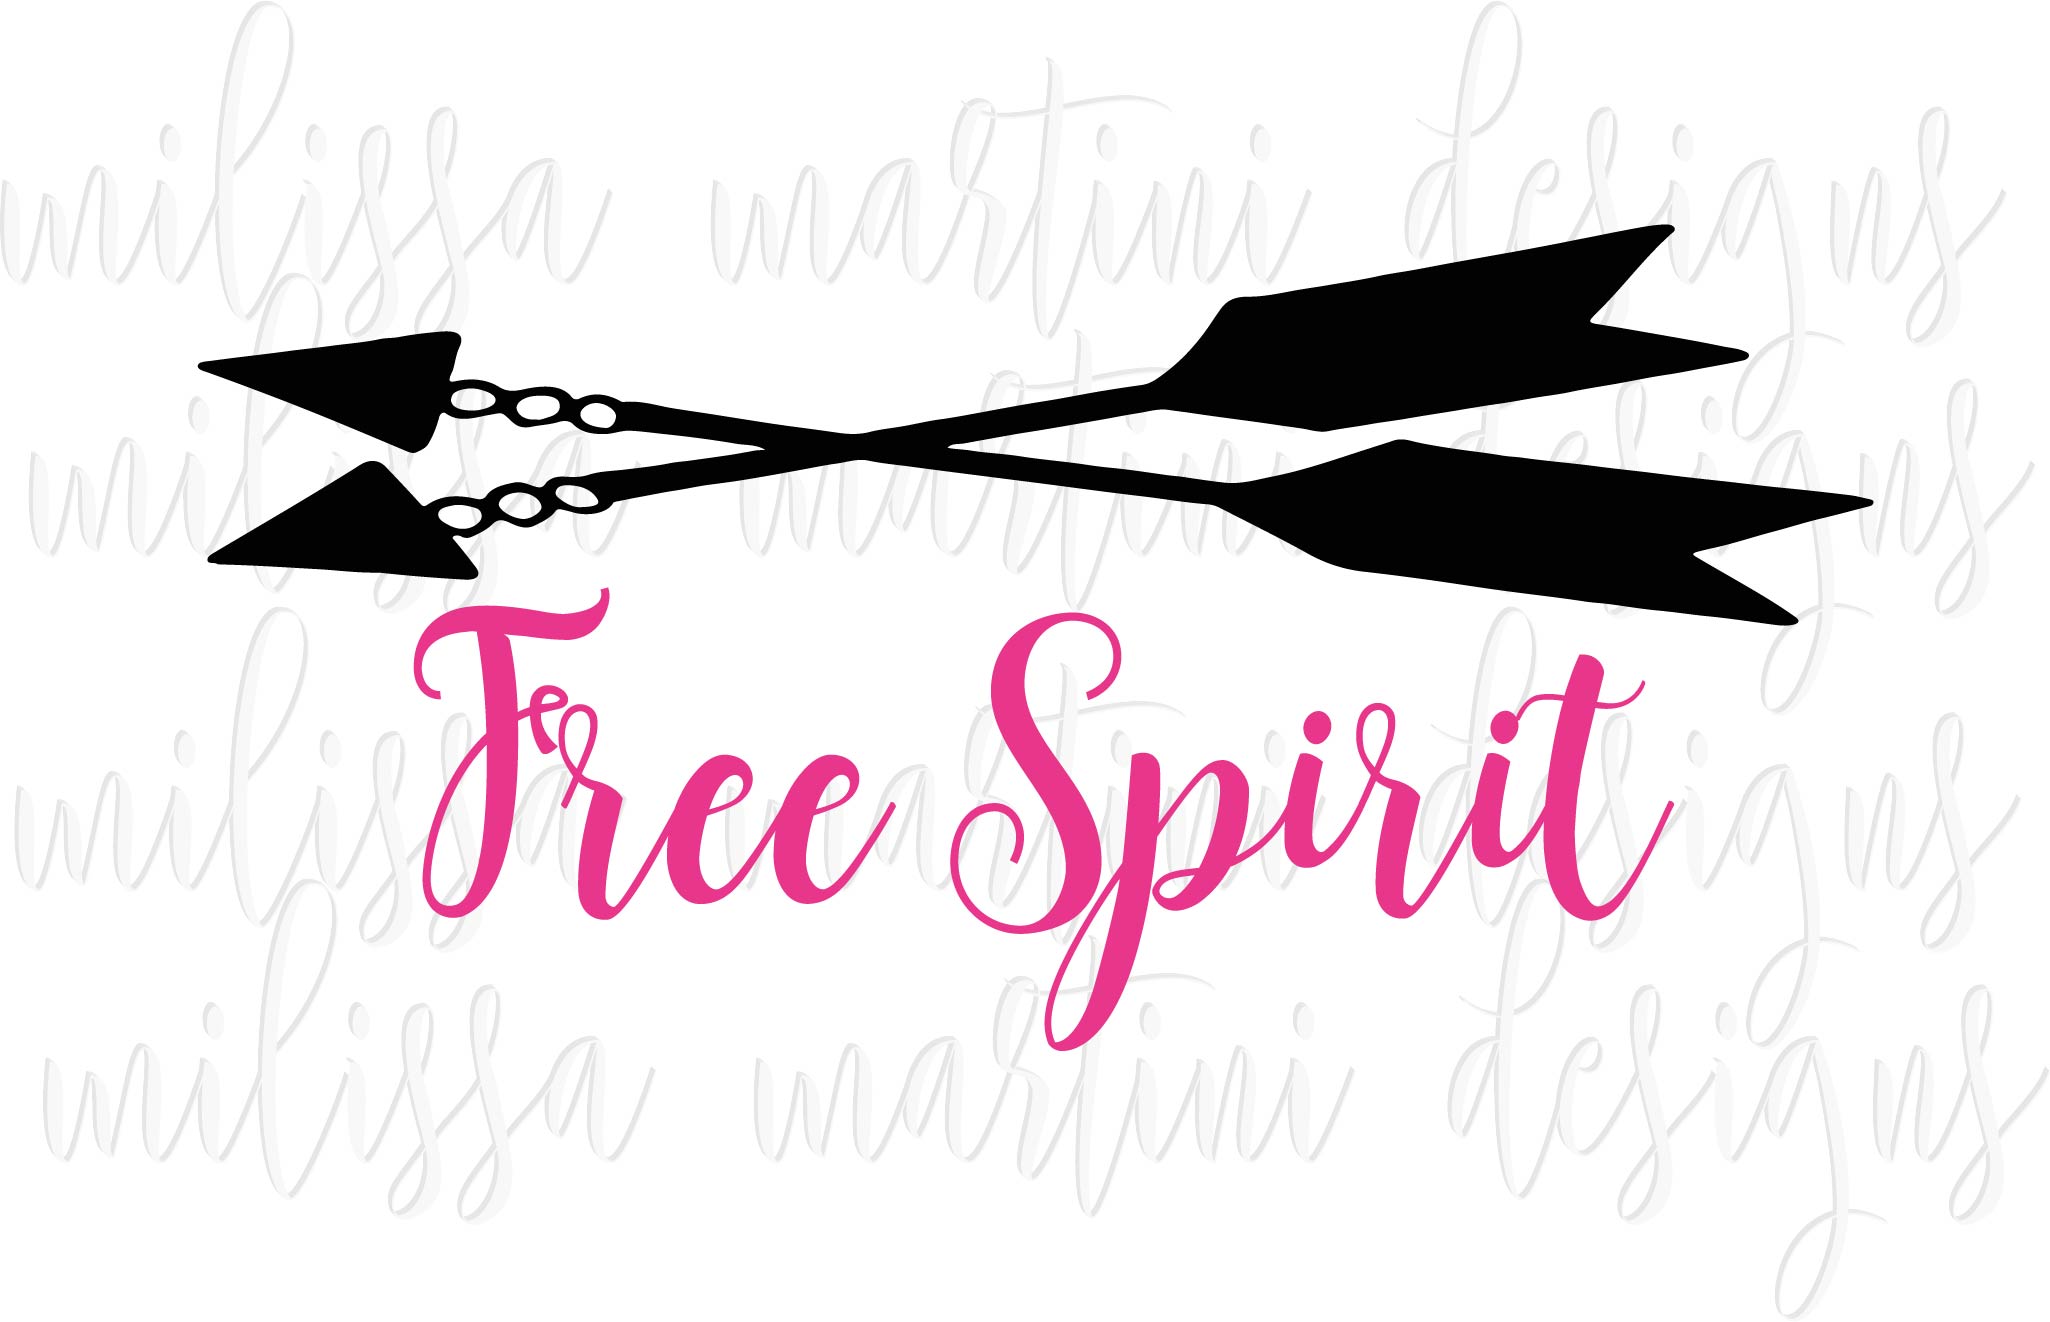 Download Free Spirit SVG Cut File | Design Bundles